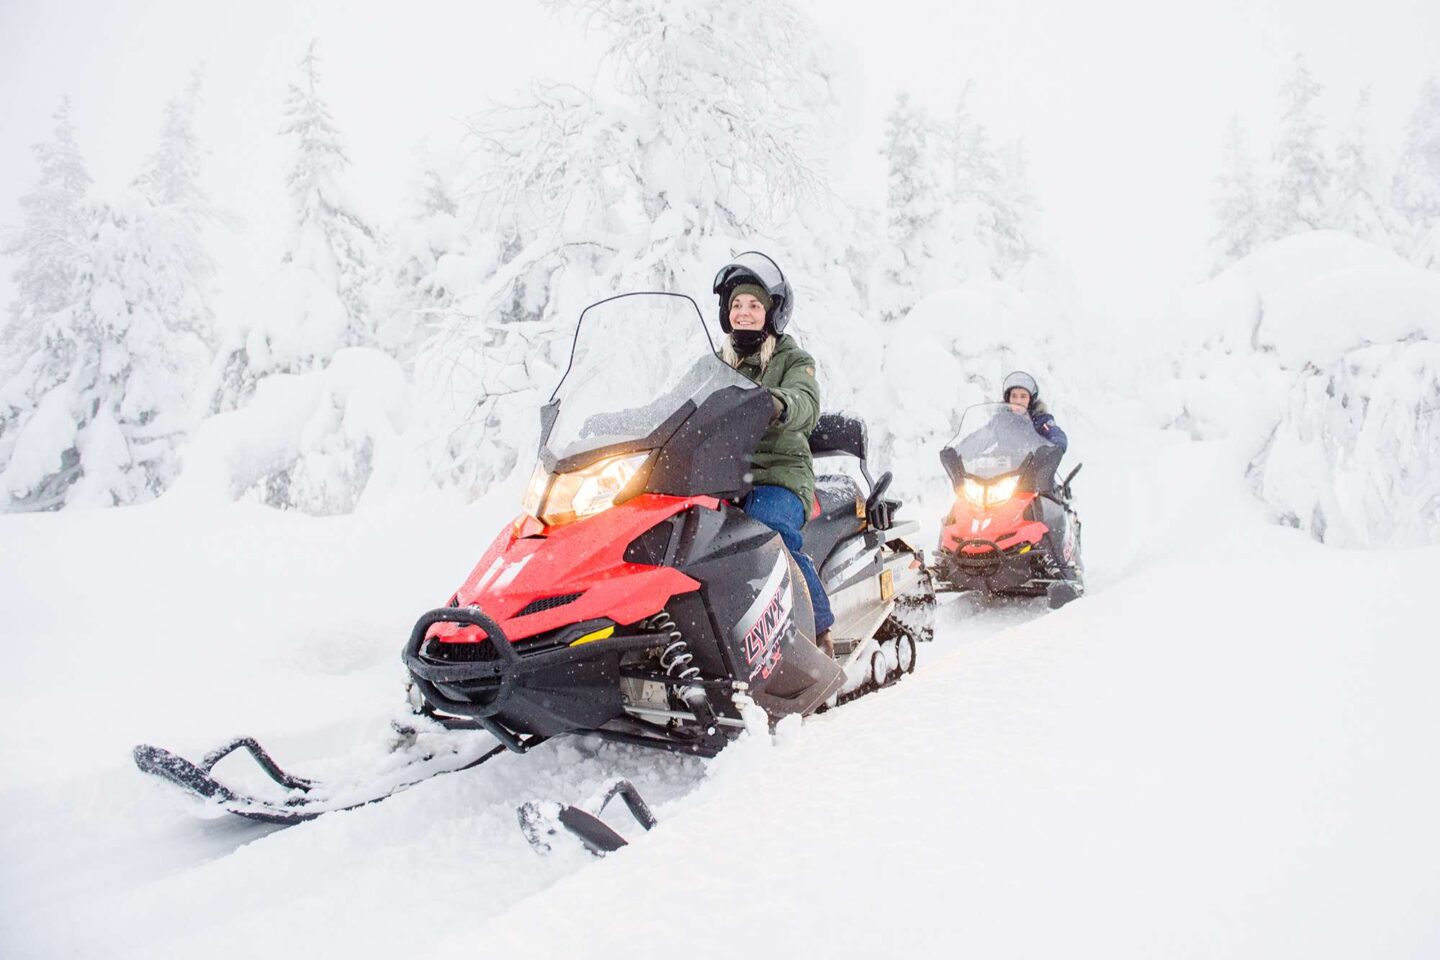 finnish lapland snowmobiling through snowy forest vf